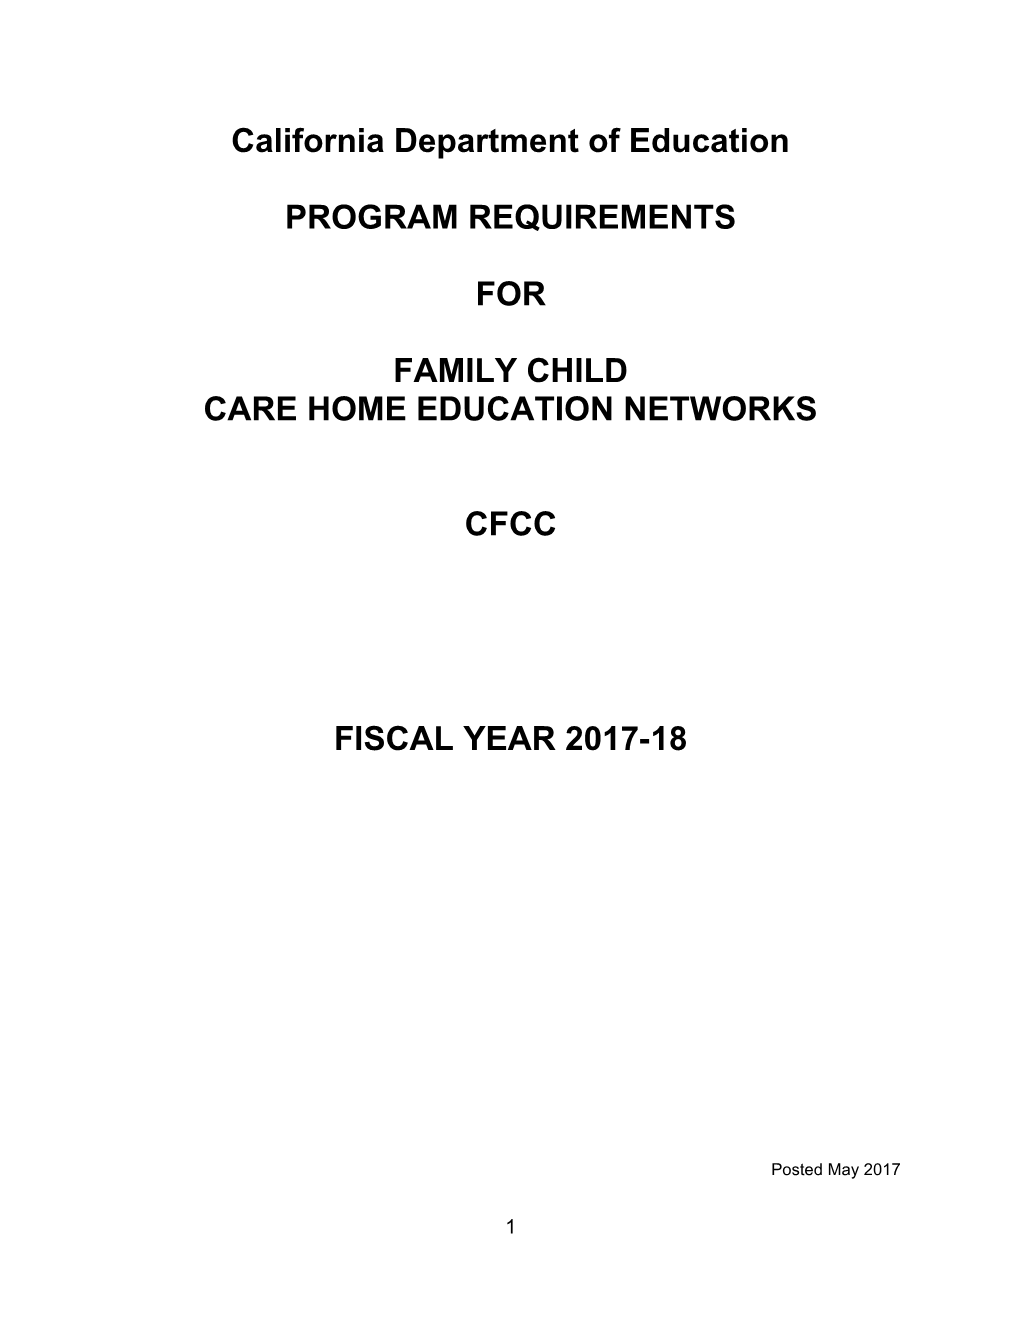 2017-18 CFCC Program - Child Development (CA Dept of Education)